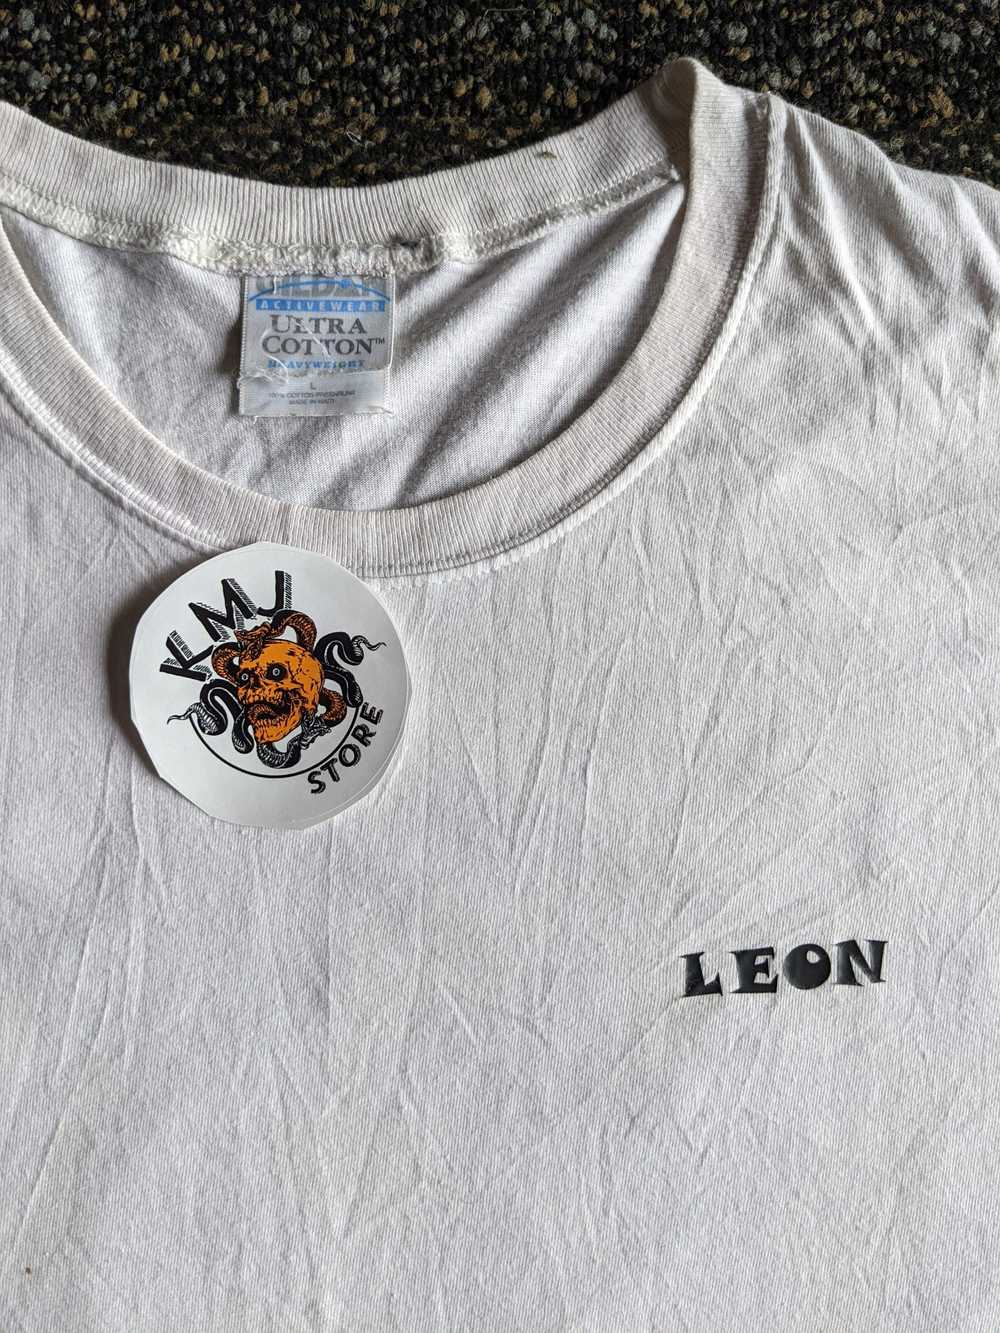 Vintage ©️90s Leon The Professional - image 4